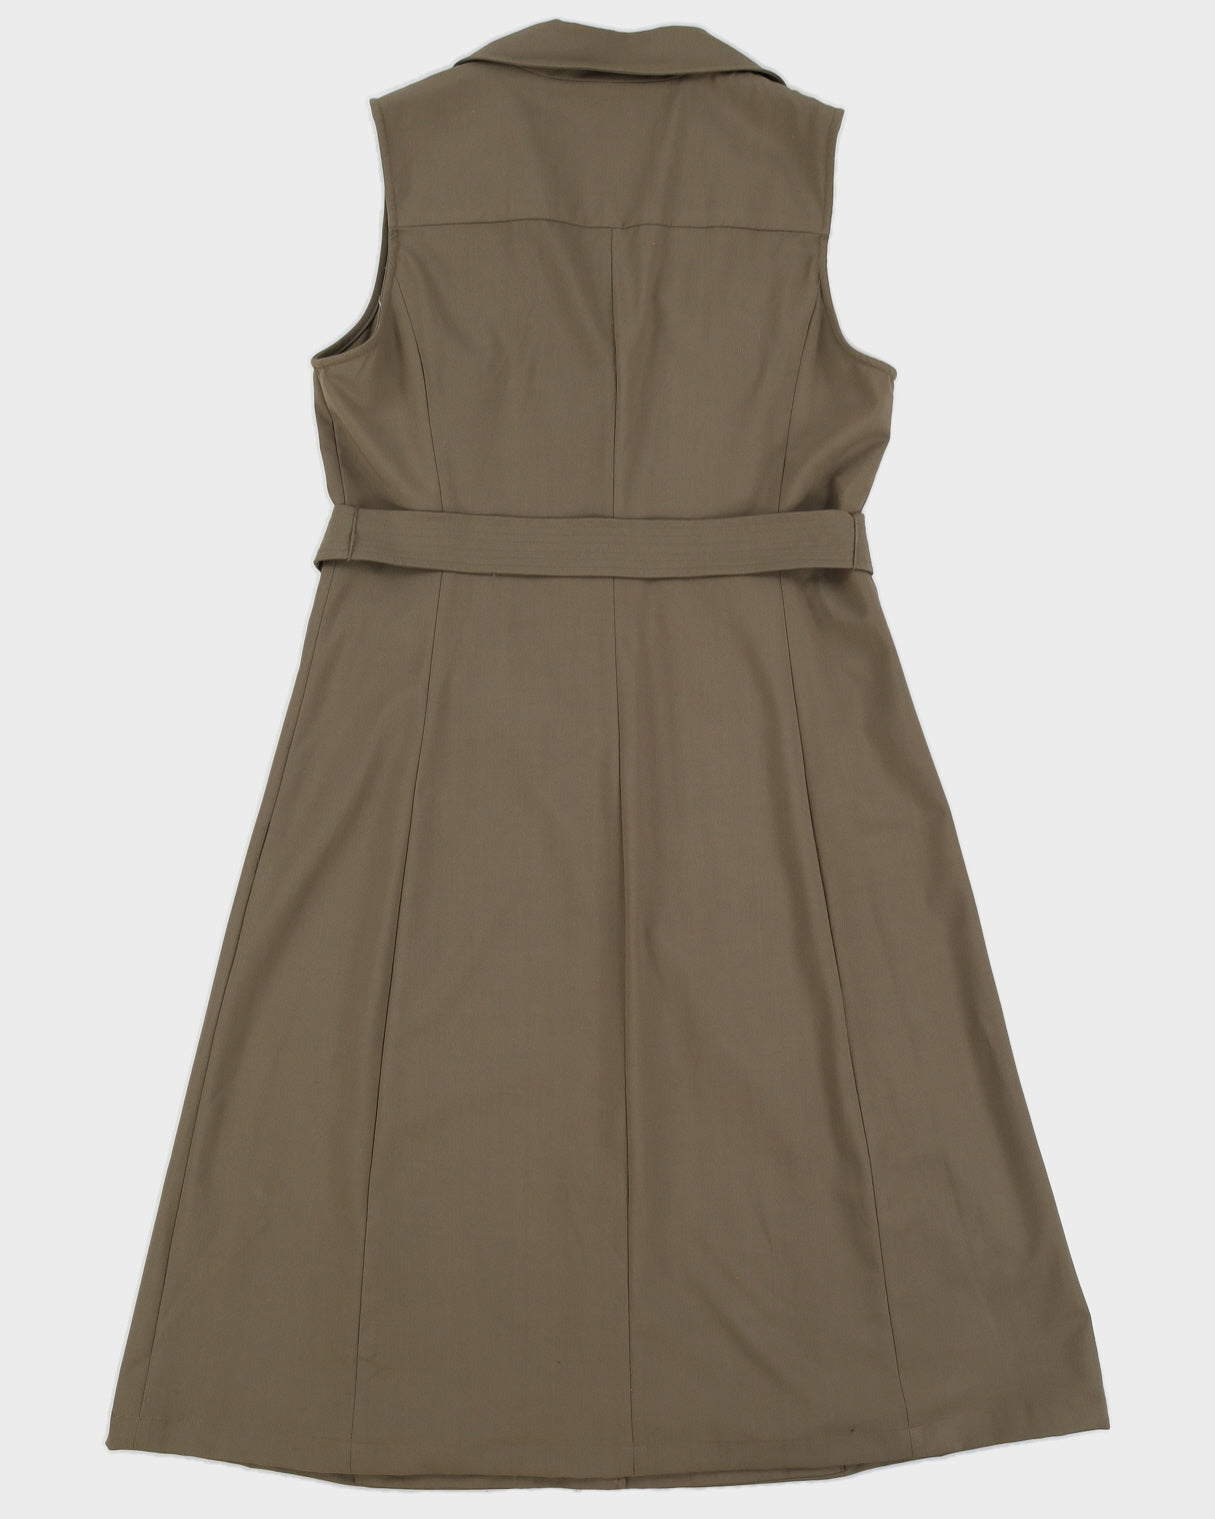 Calvin Klein Green Sleeveless Button Down Dress - M/L